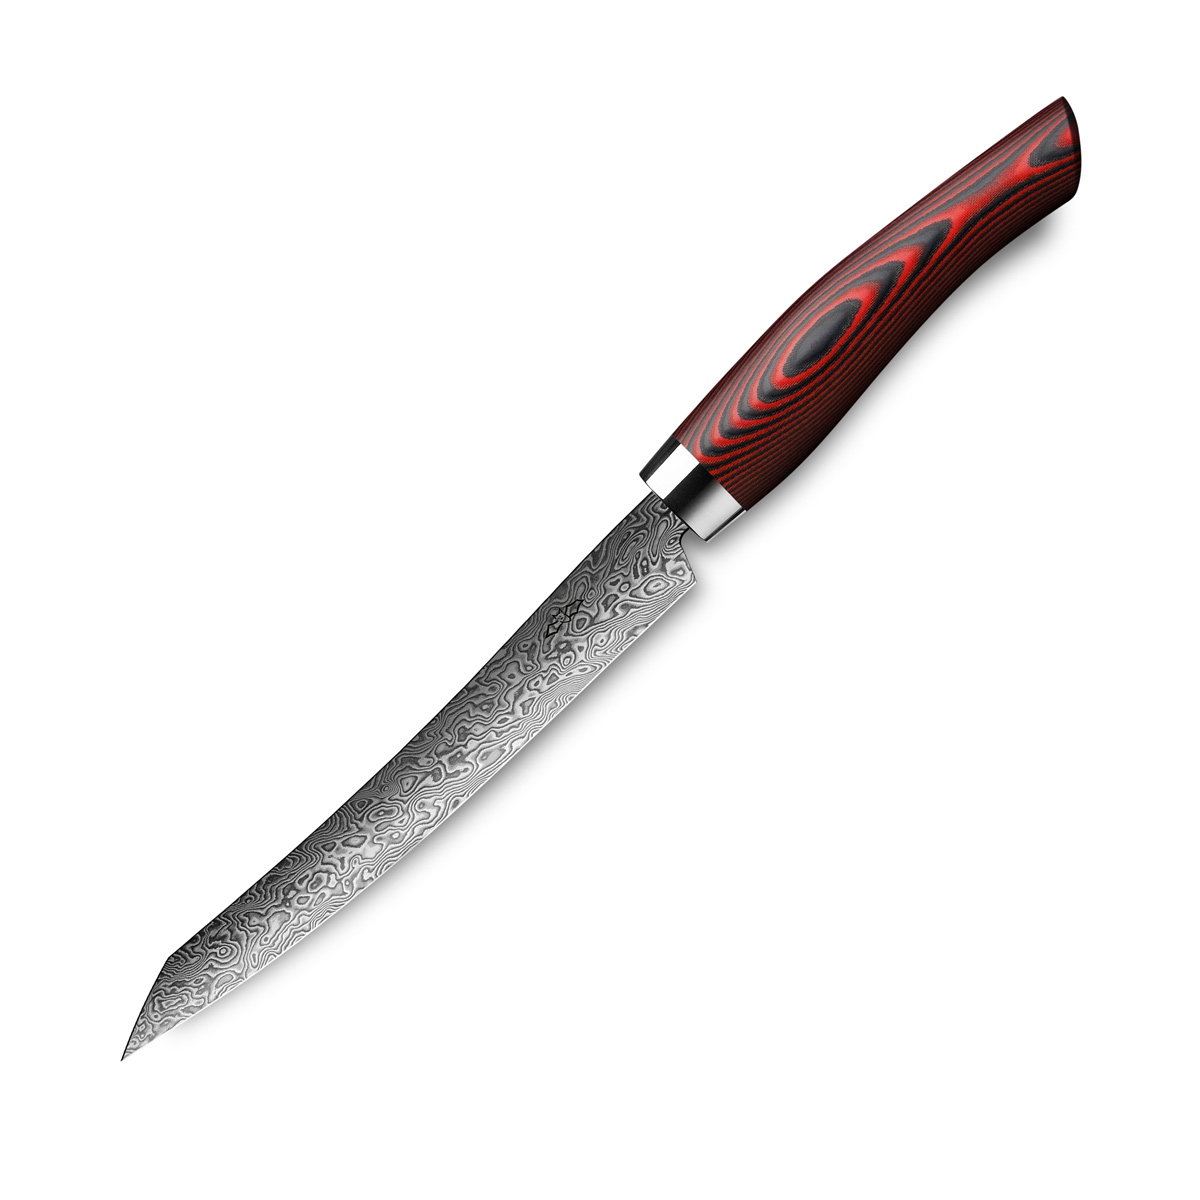 Nesmuk Exklusiv C90 Damast Slicer 16 cm / Griff aus rotem Micarta